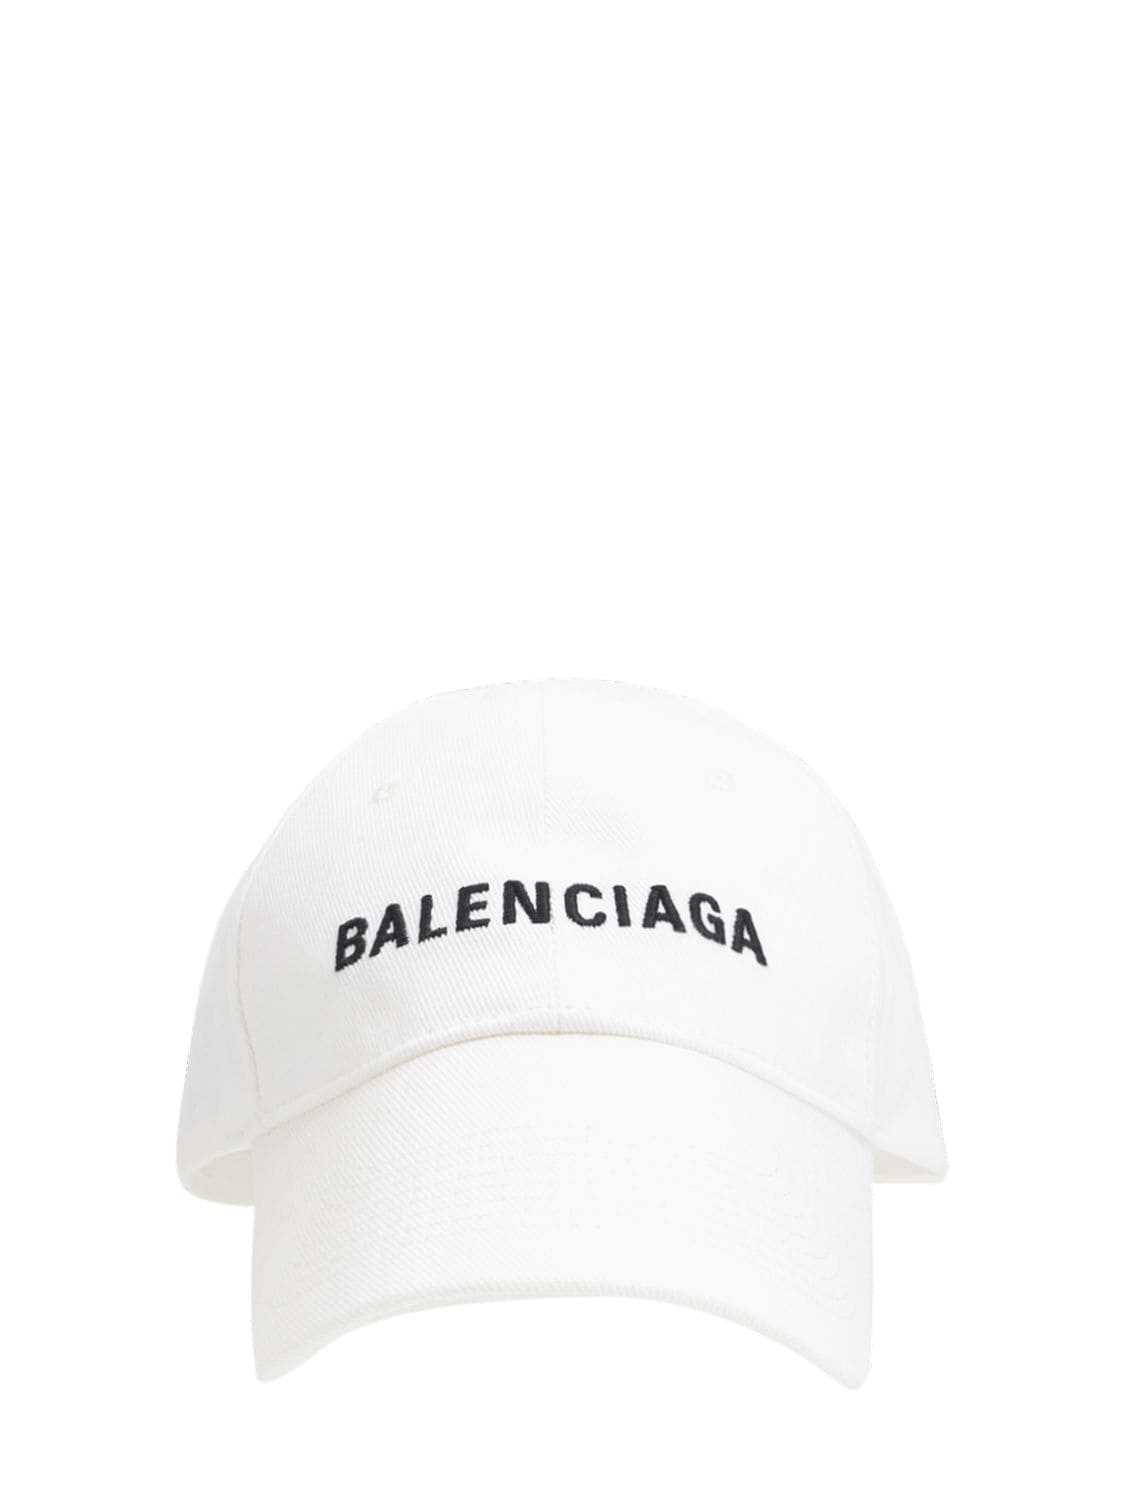 BALENCIAGA LOGO EMBROIDERED COTTON BASEBALL HAT,74IWD2045-OTA2MA2